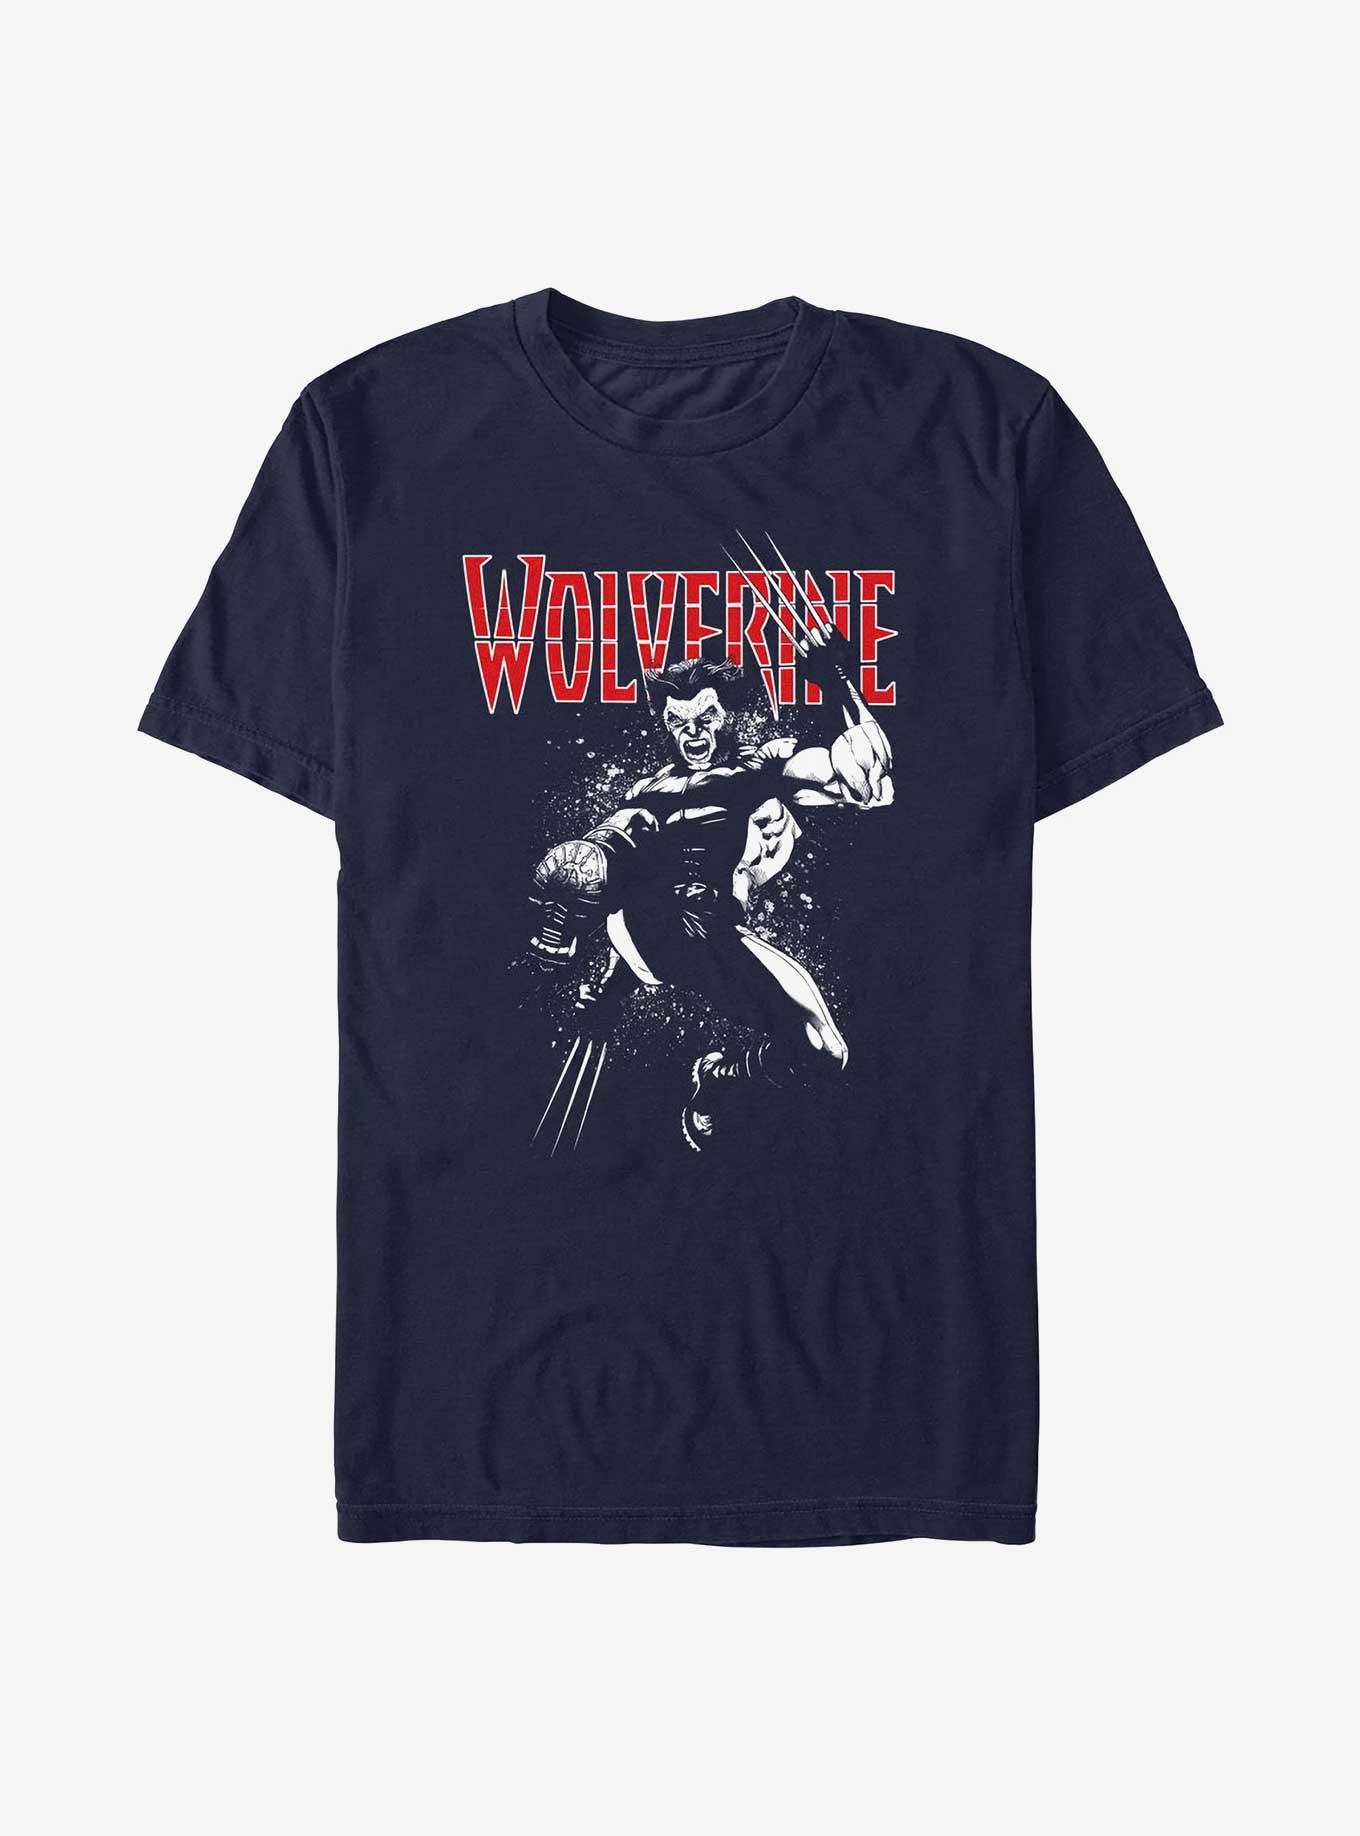 Wolverine Jump Tour T-Shirt, NAVY, hi-res